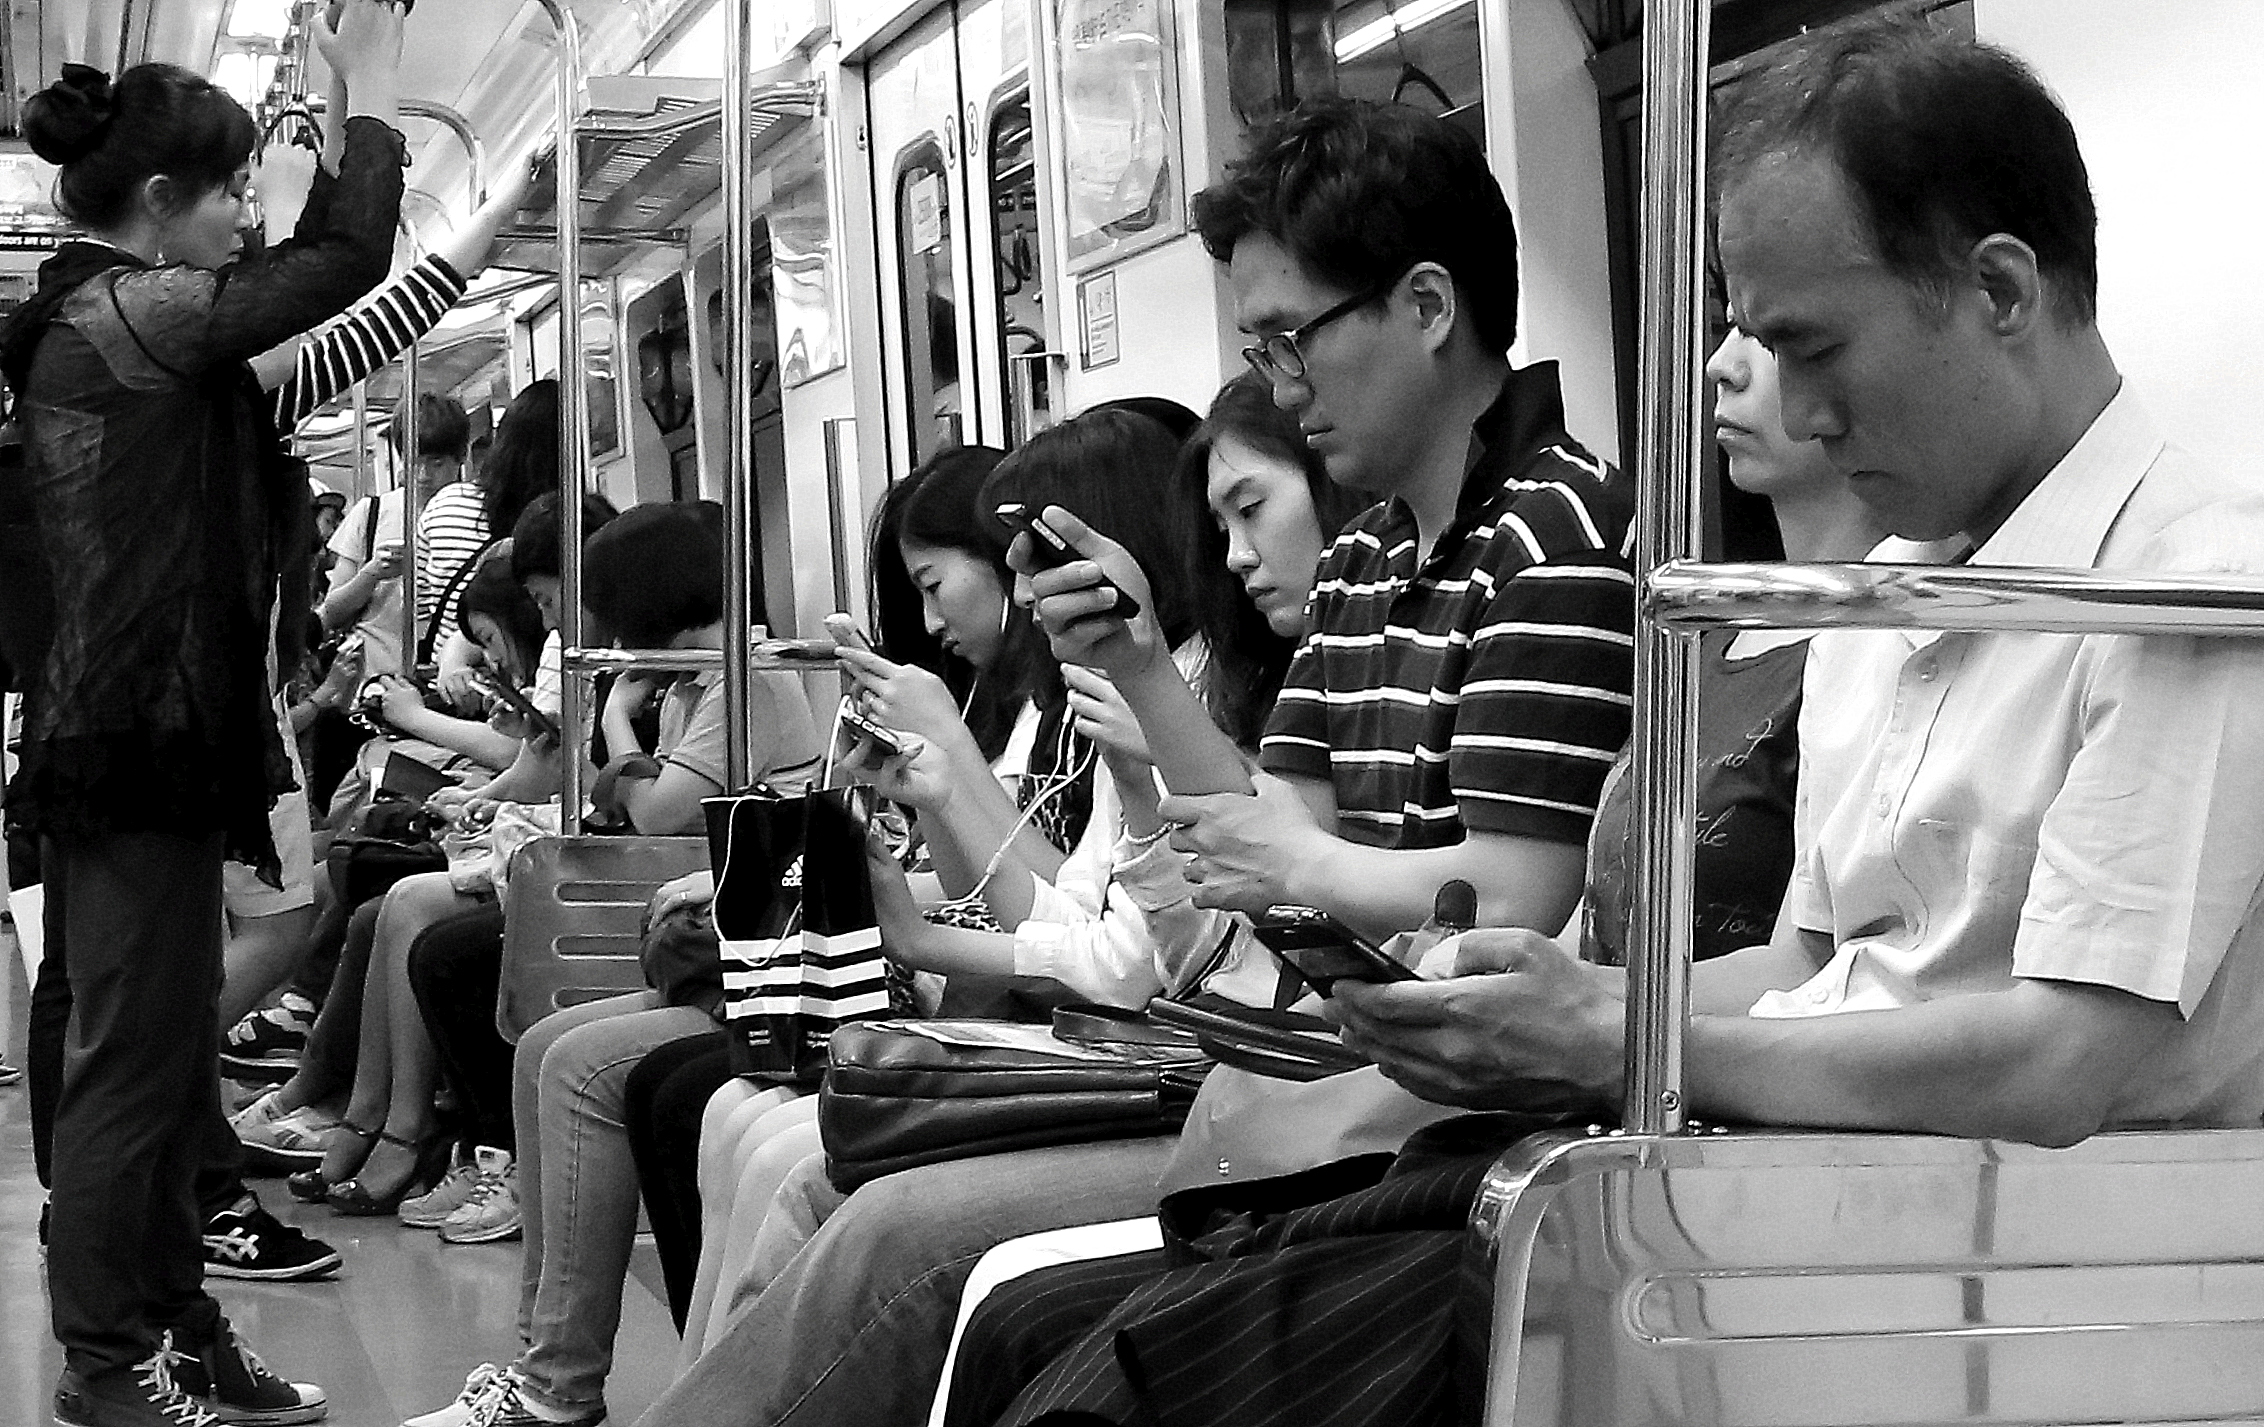 Commuters on train in Seoul